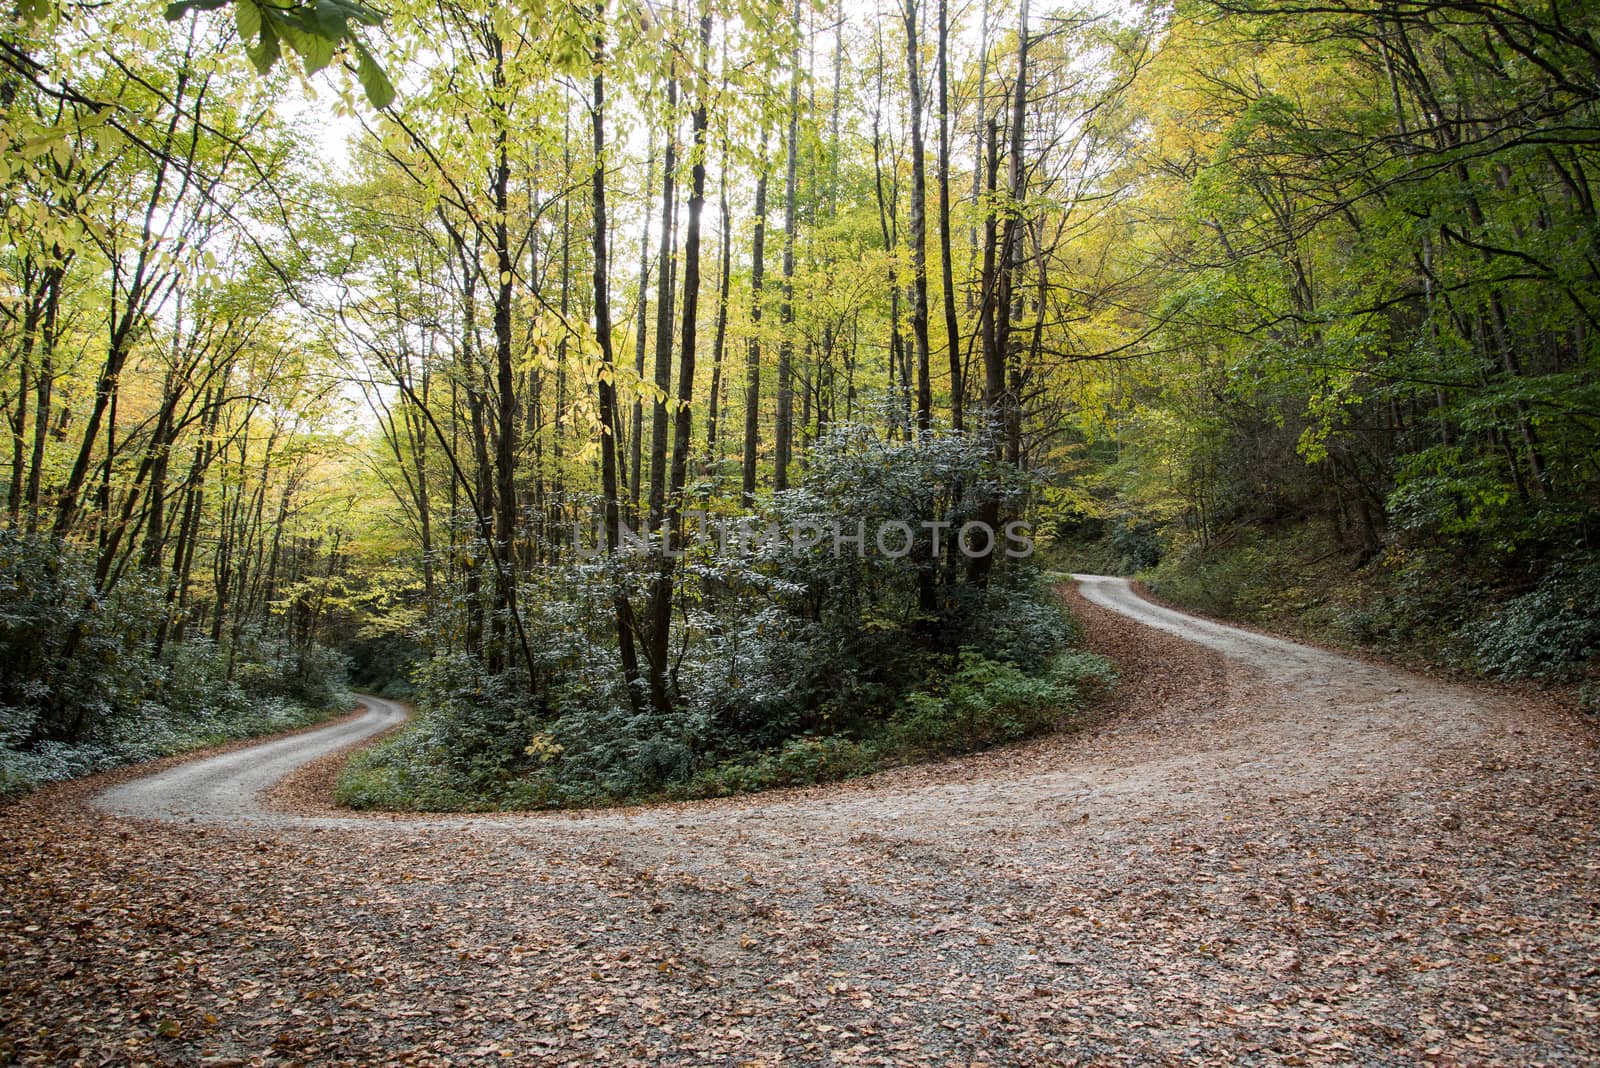 A gravel mountain road